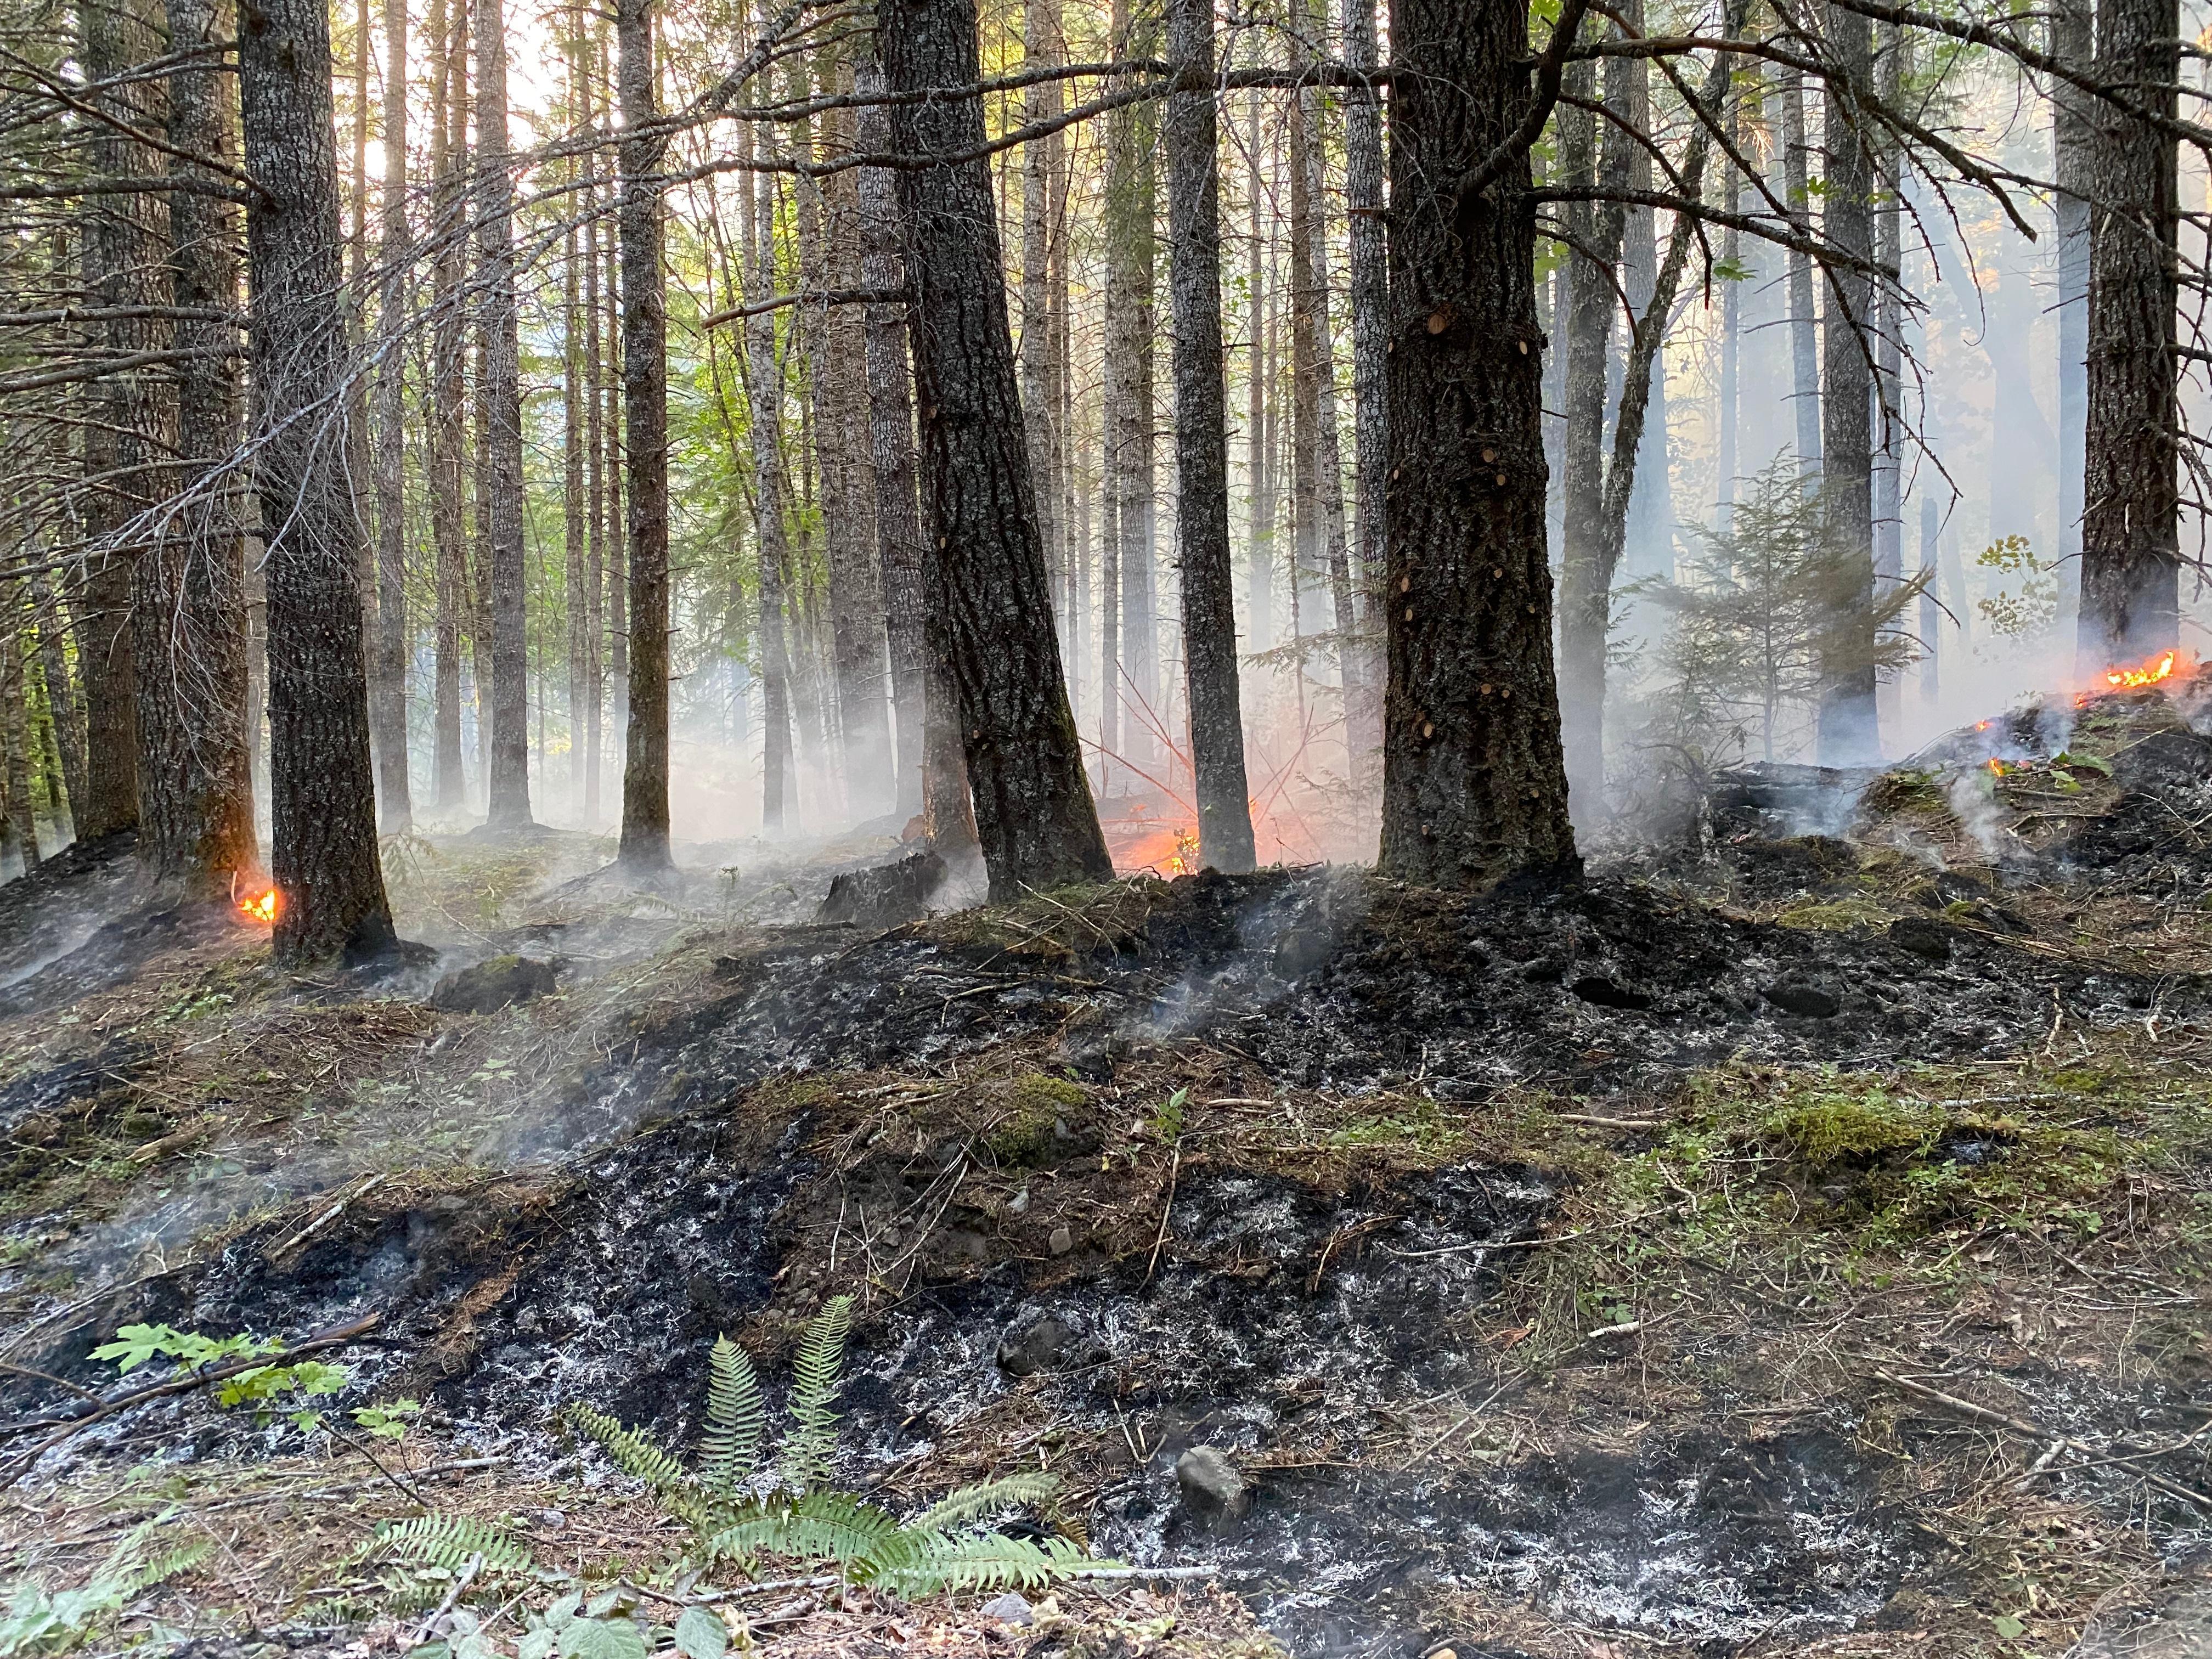 Small fires burn among tree trunks.